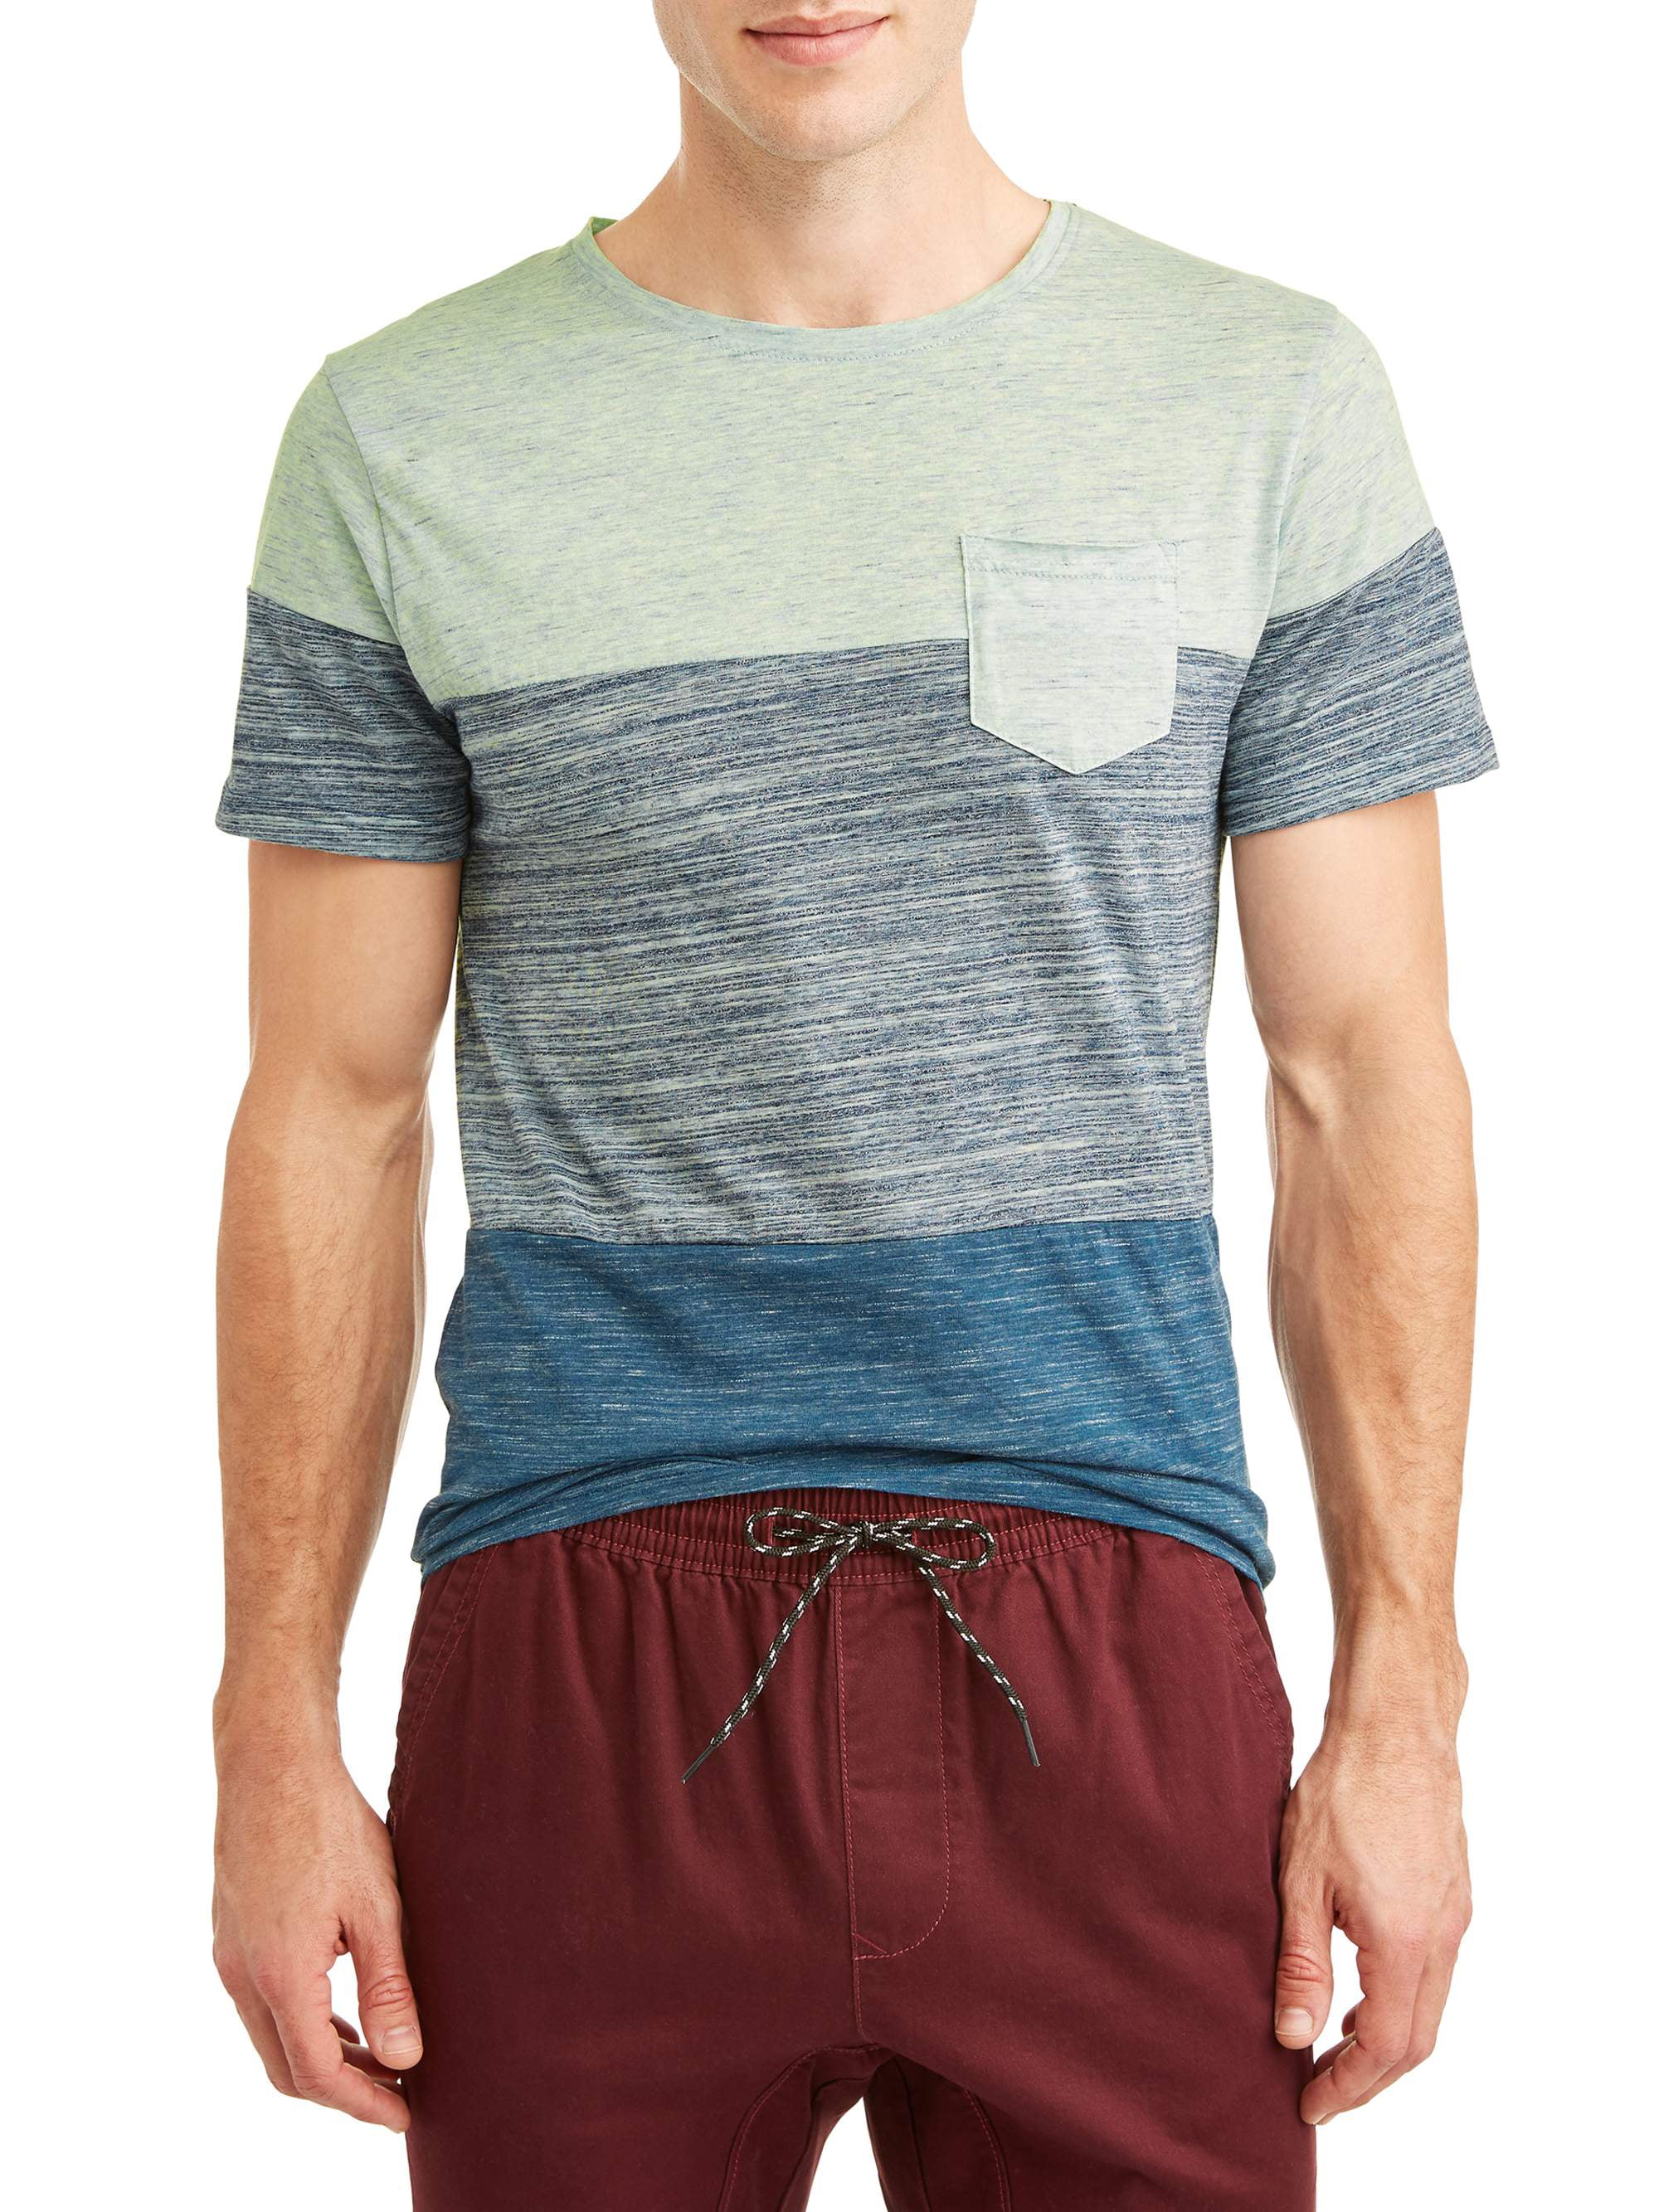 Dvision Men's Chapman Fiji Short Sleeve Stripe Knit T-Shirt - Walmart.com